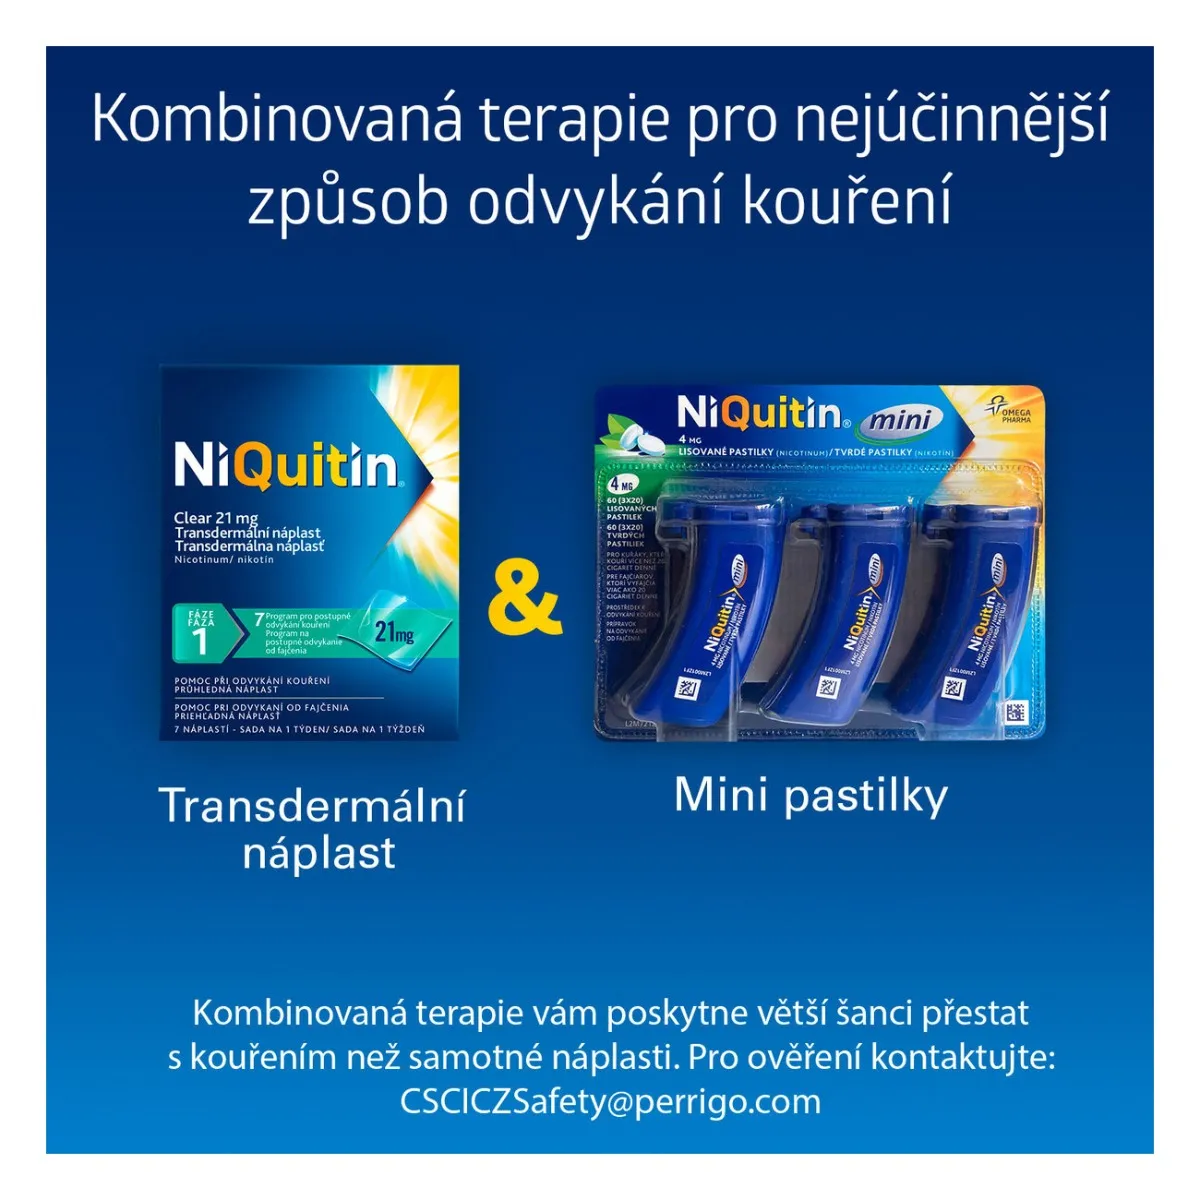 Niquitin mini 4 mg 20 lisovaných pastilek